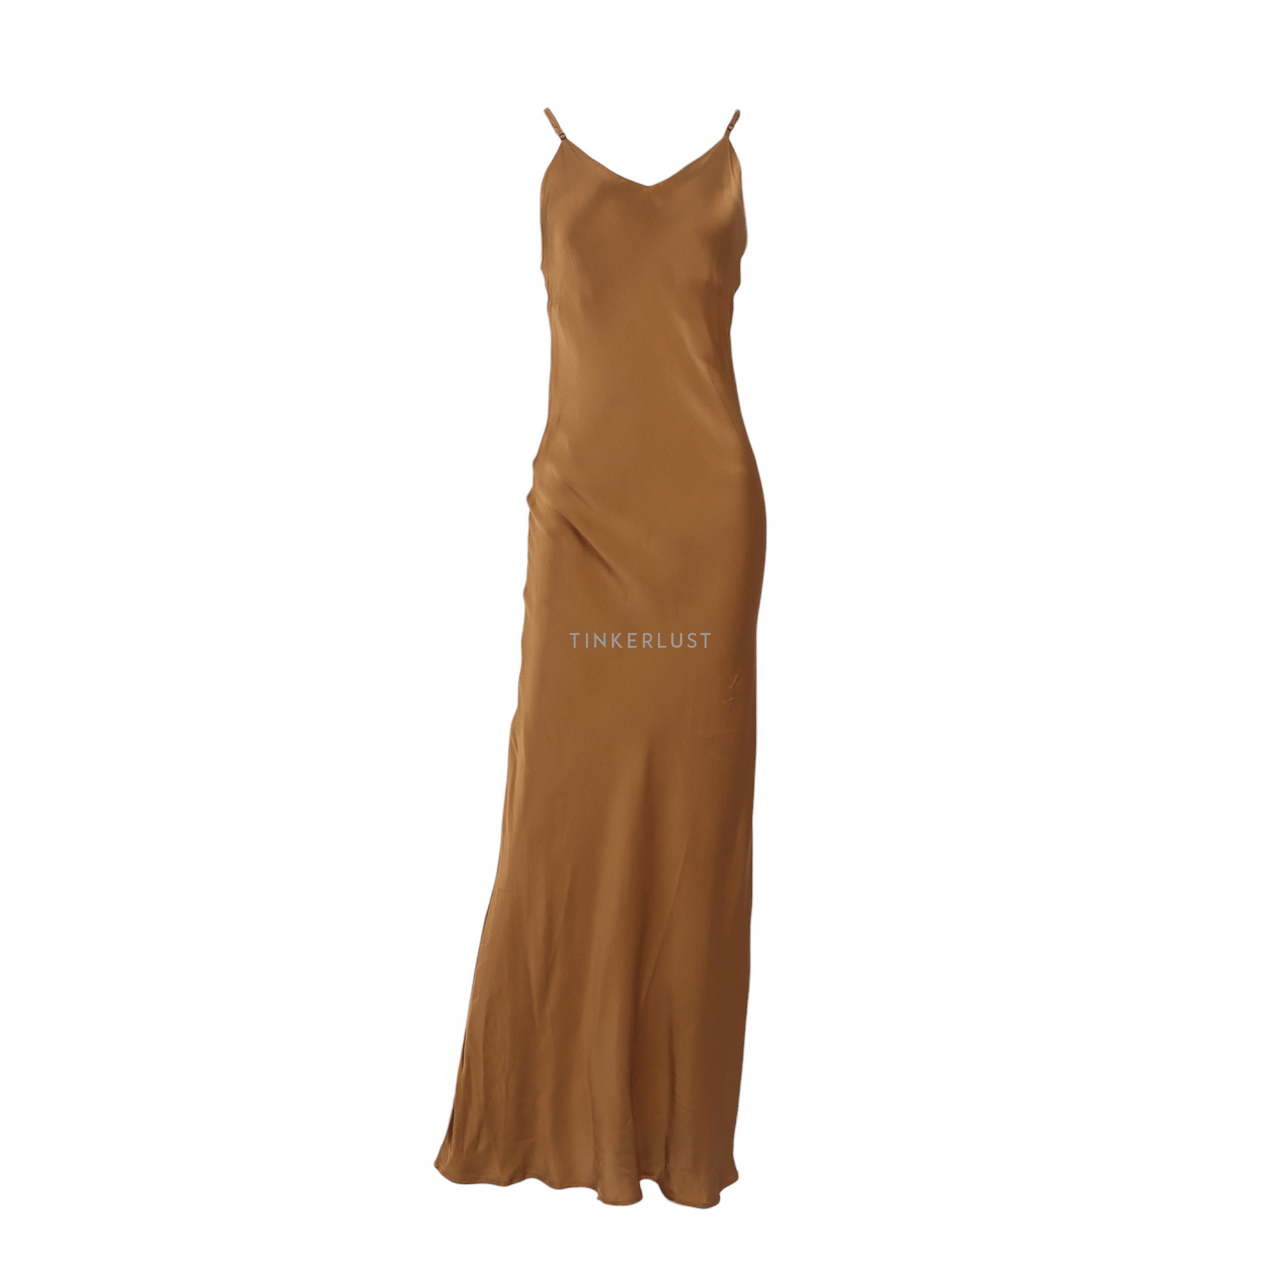 uma and Leopold Bronze Long Dress